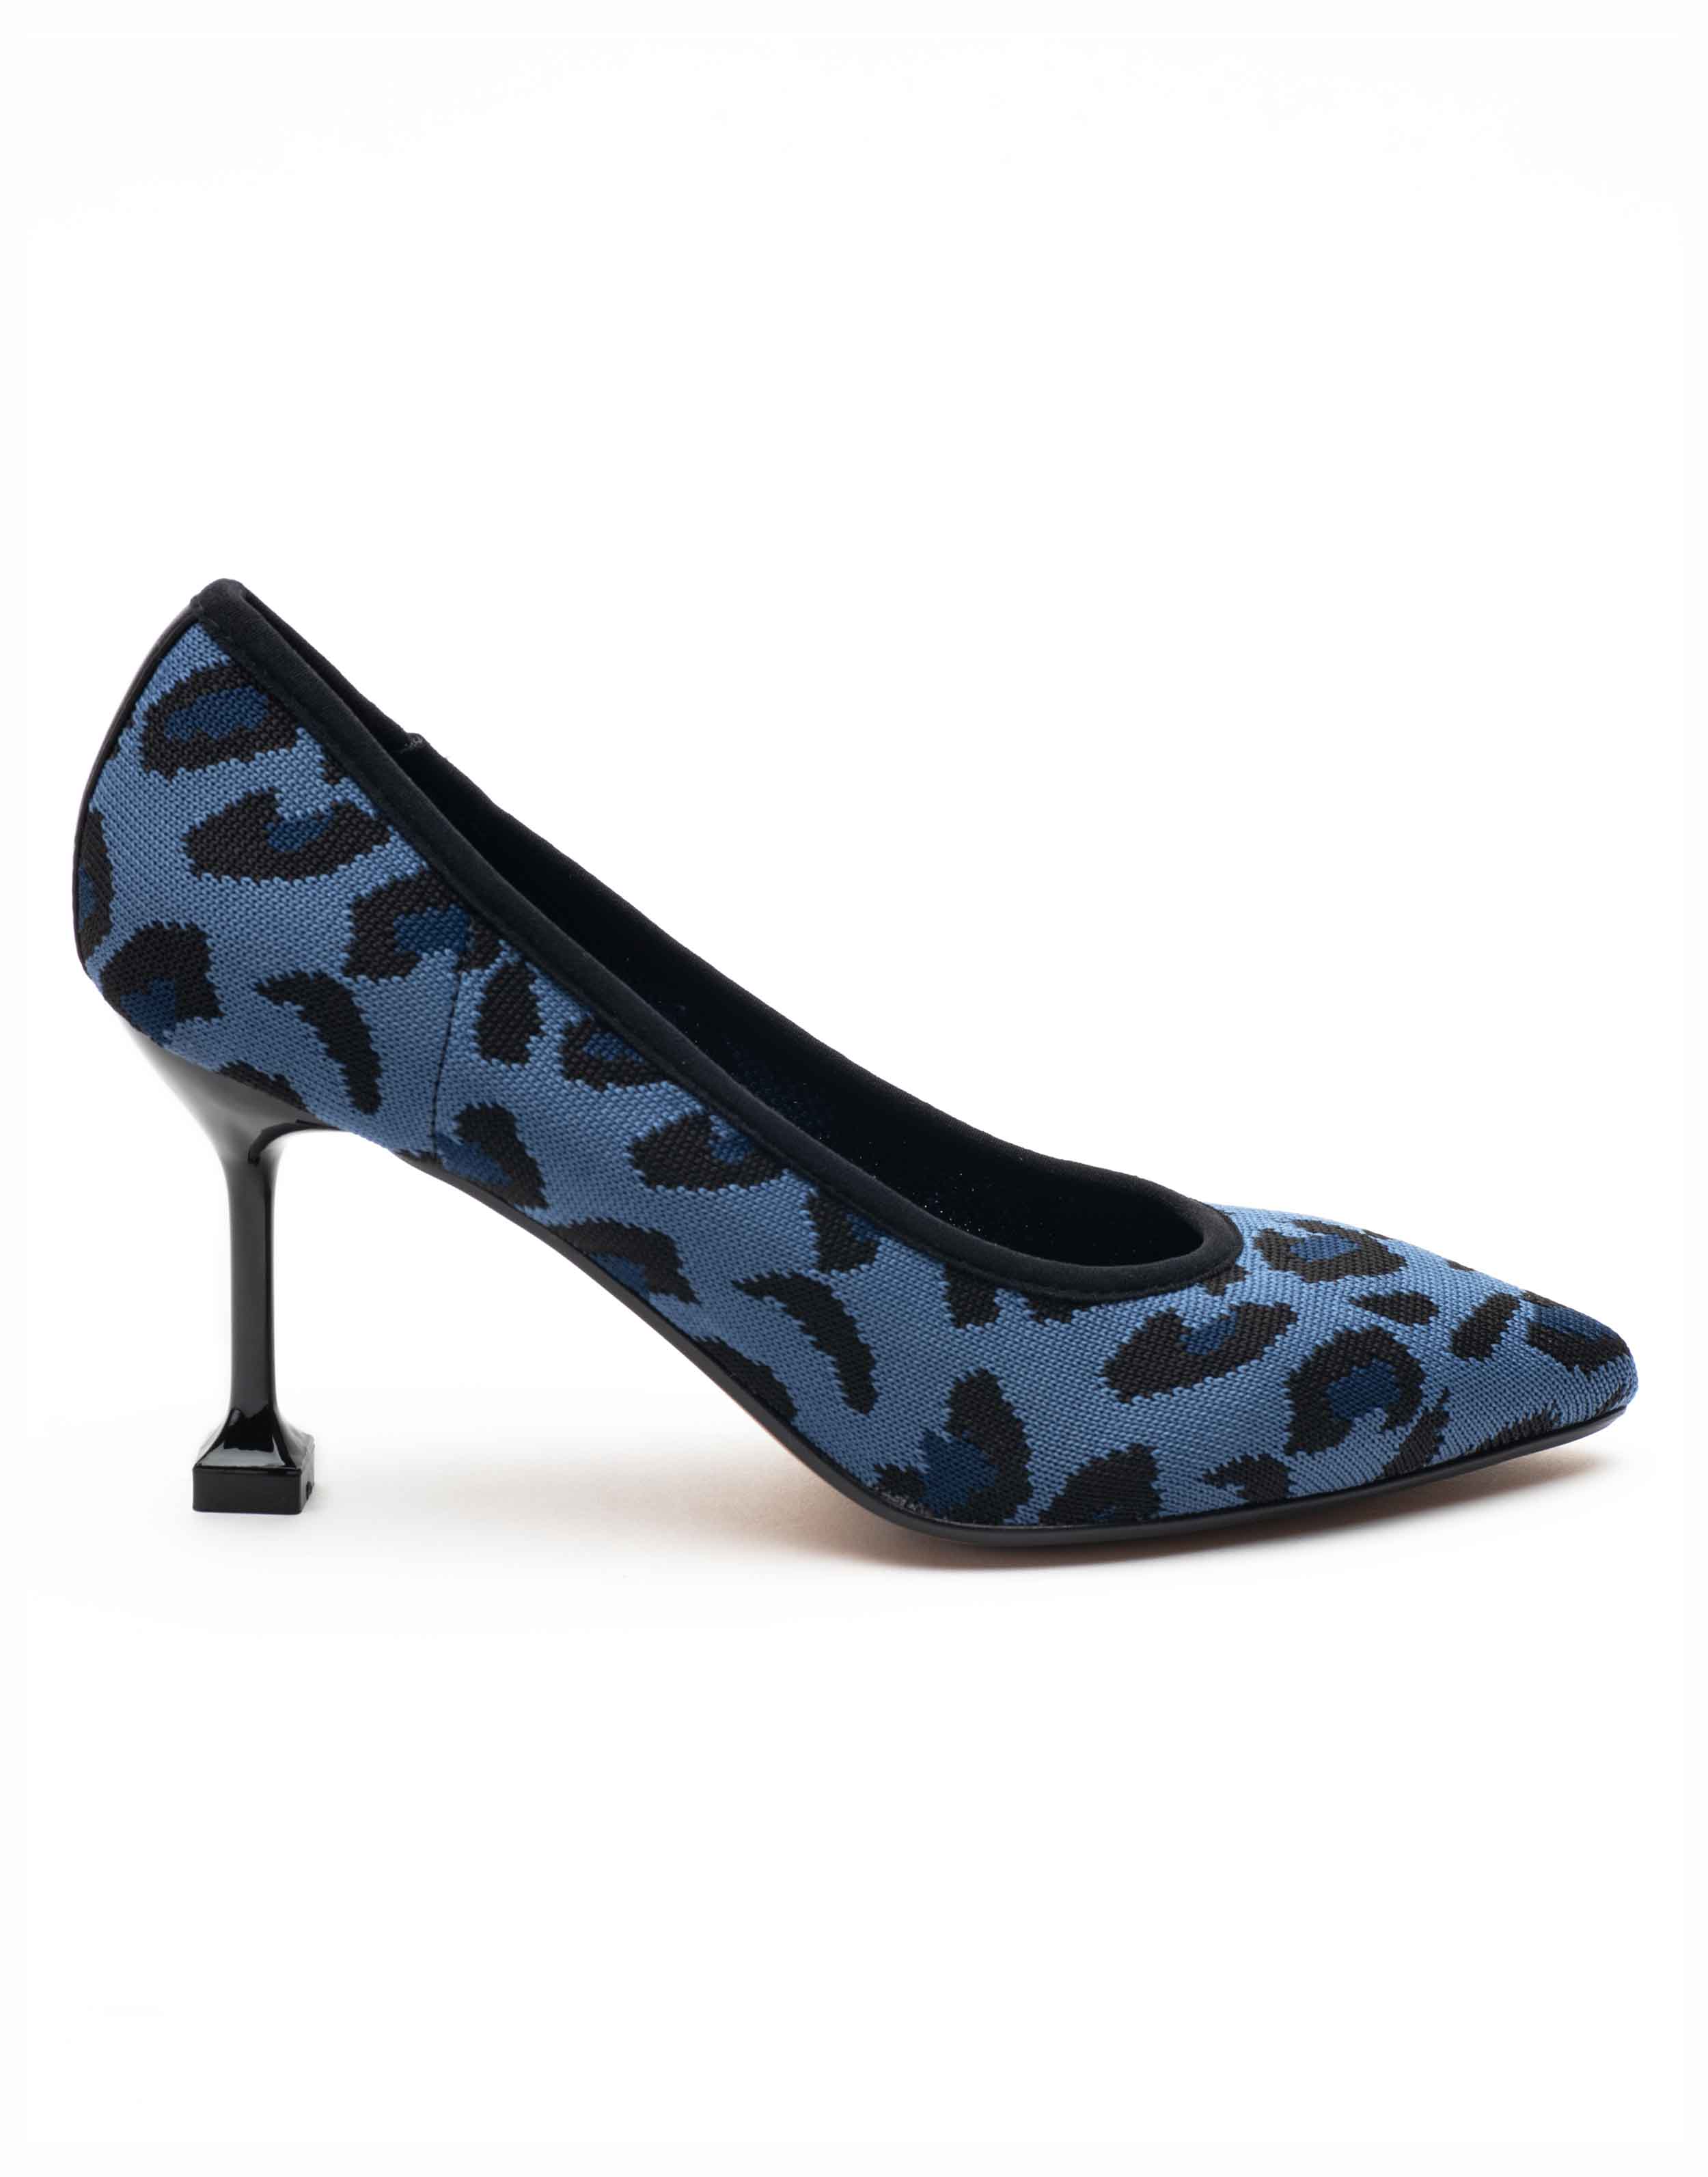 Shop | Bella Leopardo | Leopard Print Shoes | Luxury